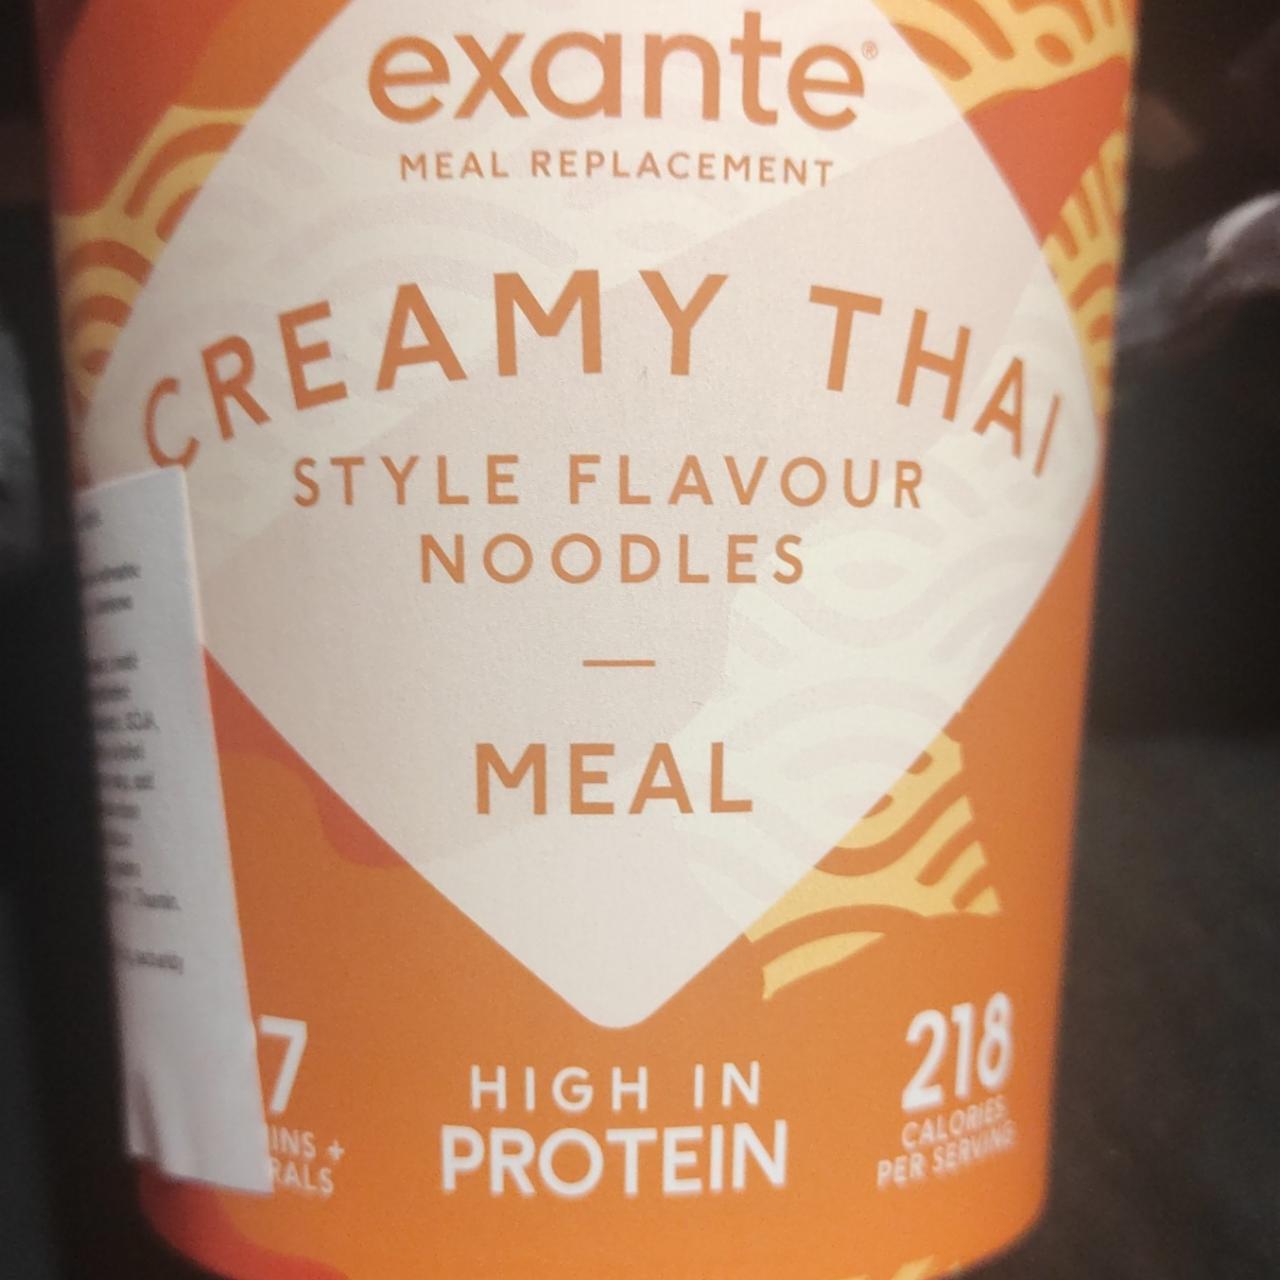 Fotografie - Creamy Thai Style Flavor Noodles Exante